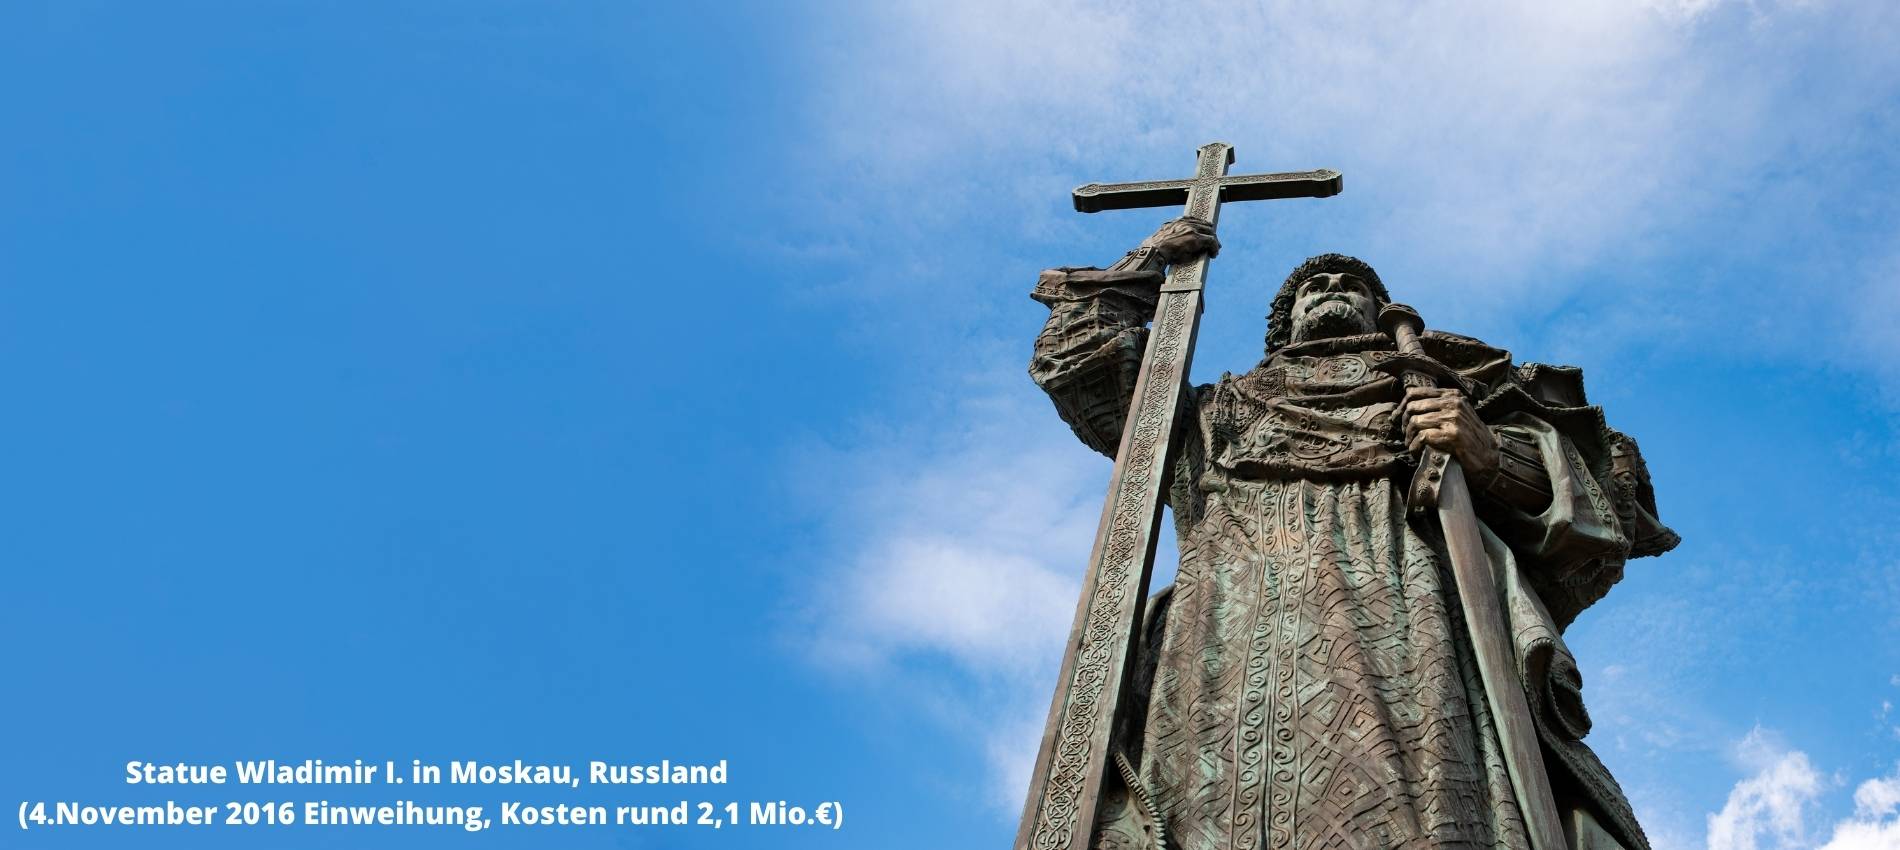 Statue Wladimir I., Taufe der Rus Denkmal in Russland, Moskau